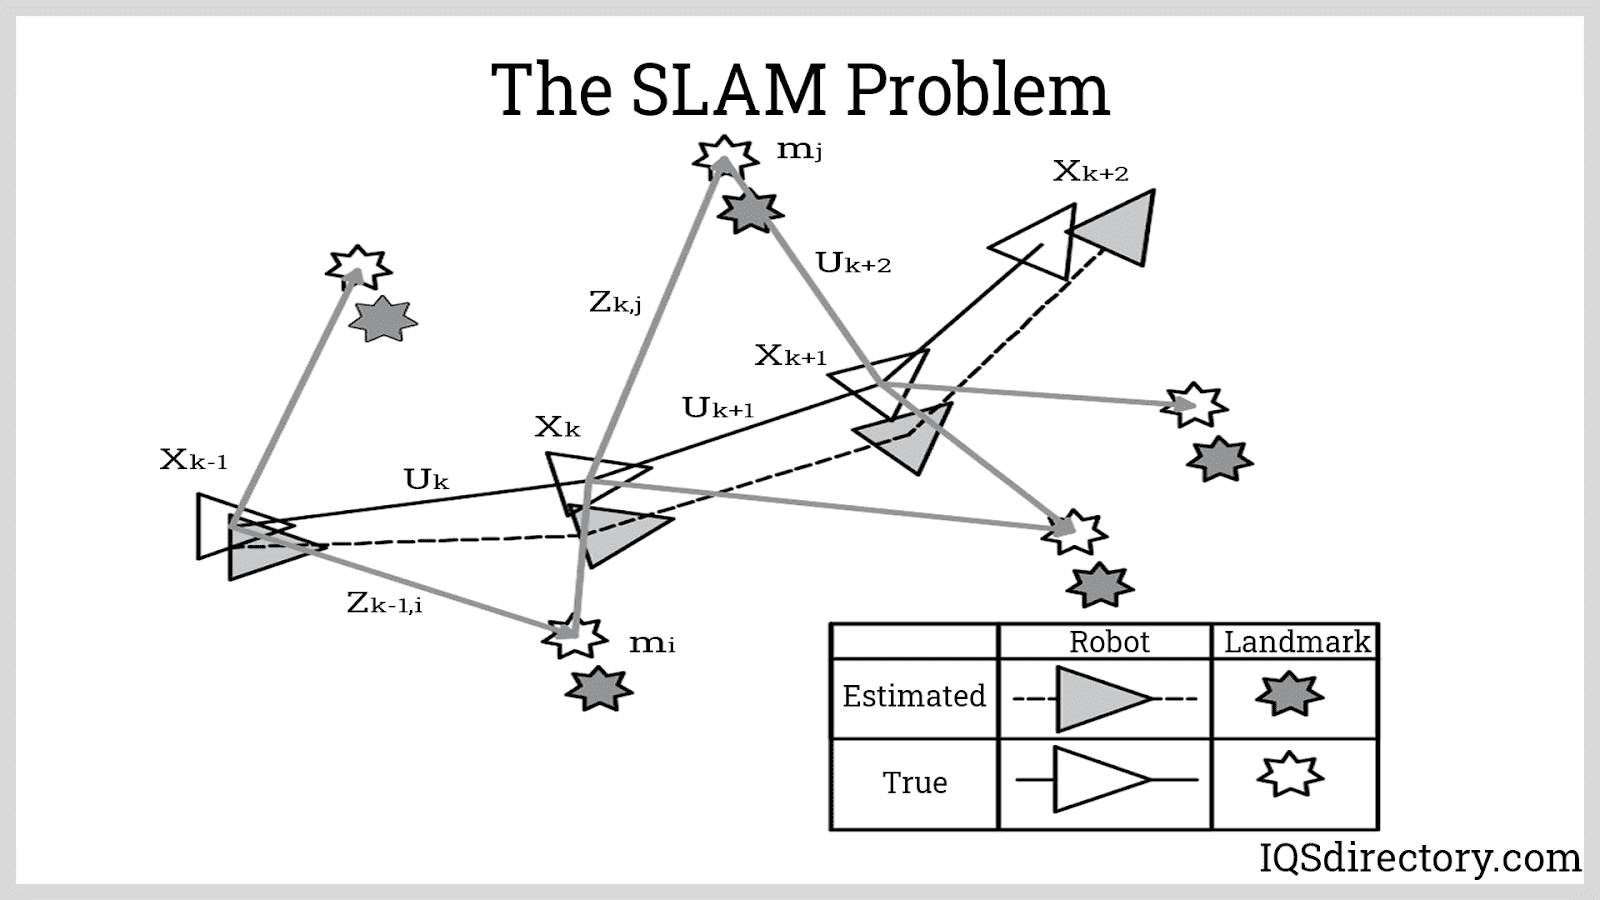 The SLAM Problem